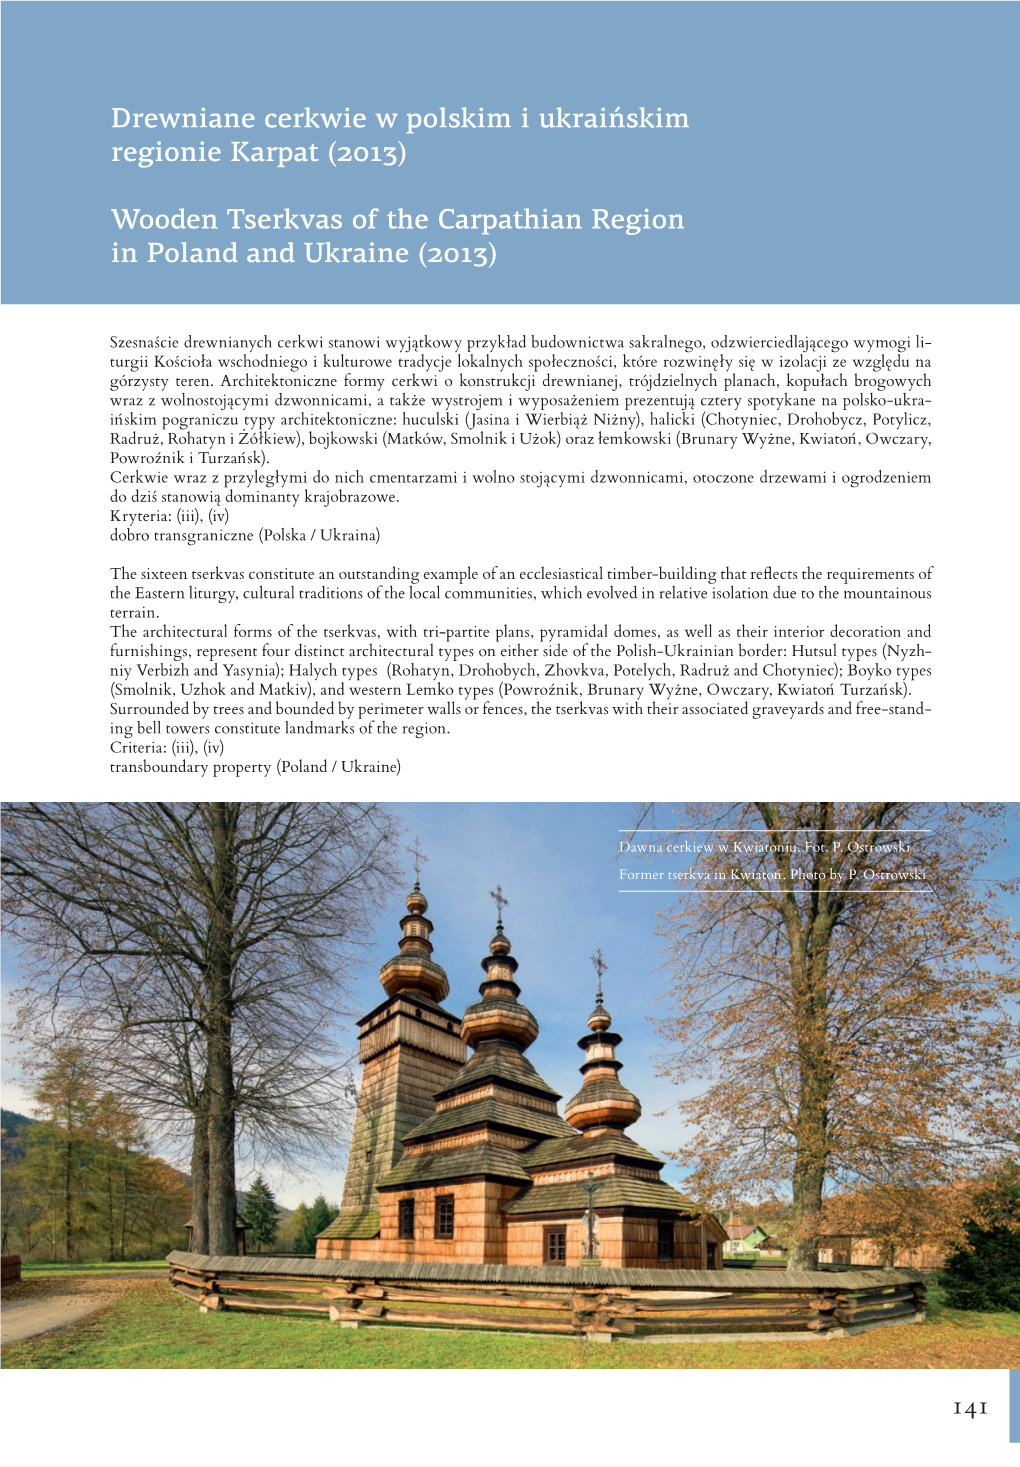 Wooden Tserkvas of the Carpathian Region in Poland and Ukraine (2013)